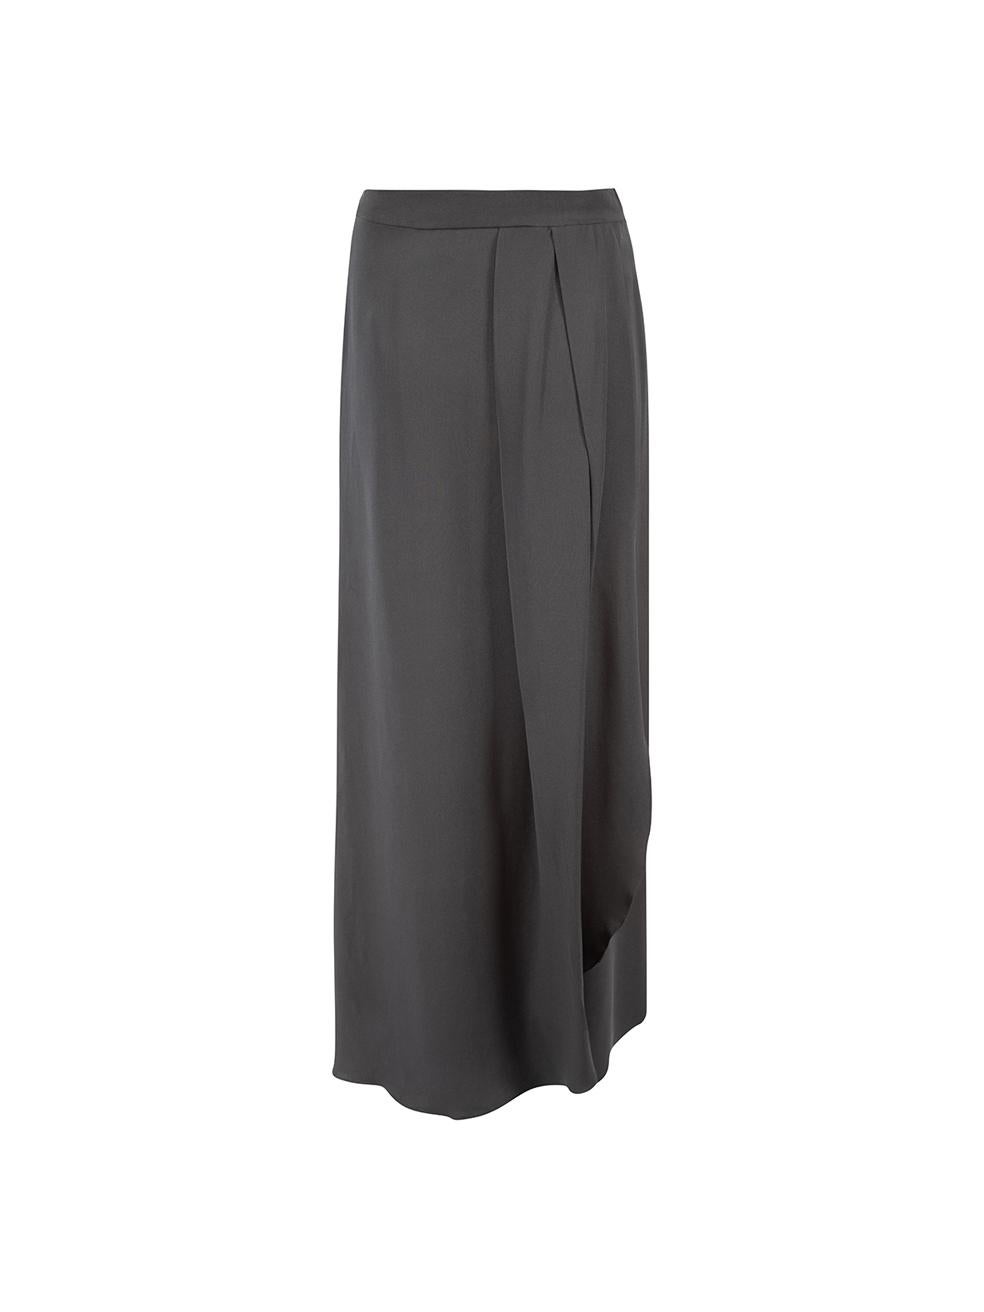 Women's Temperley London Black Silk Gathered Detail Maxi Skirt Size XS